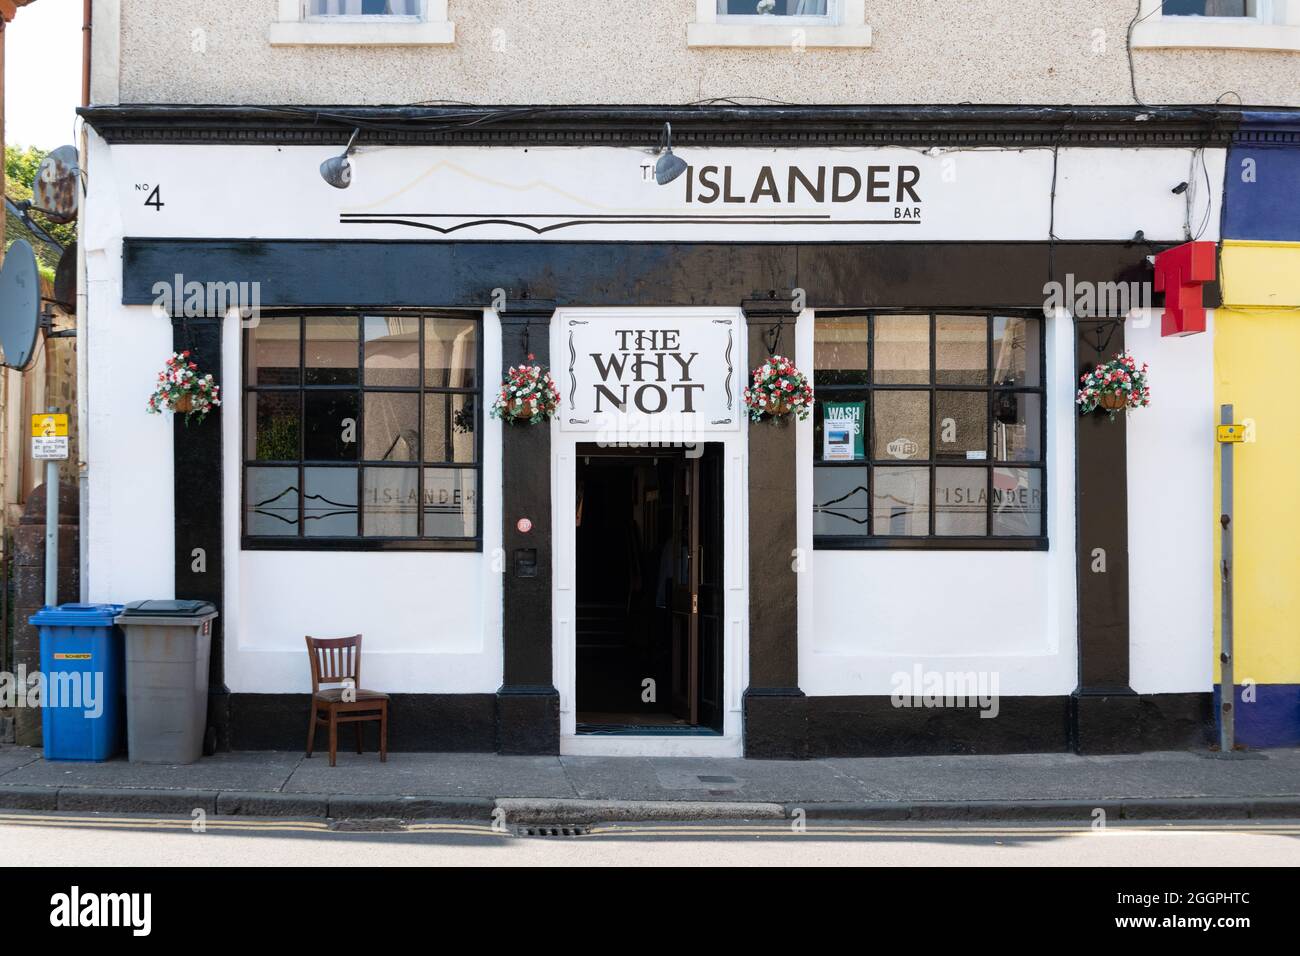 The Islander pub bar, Rothesay, Isle of Bute, Scotland, UK Stock Photo